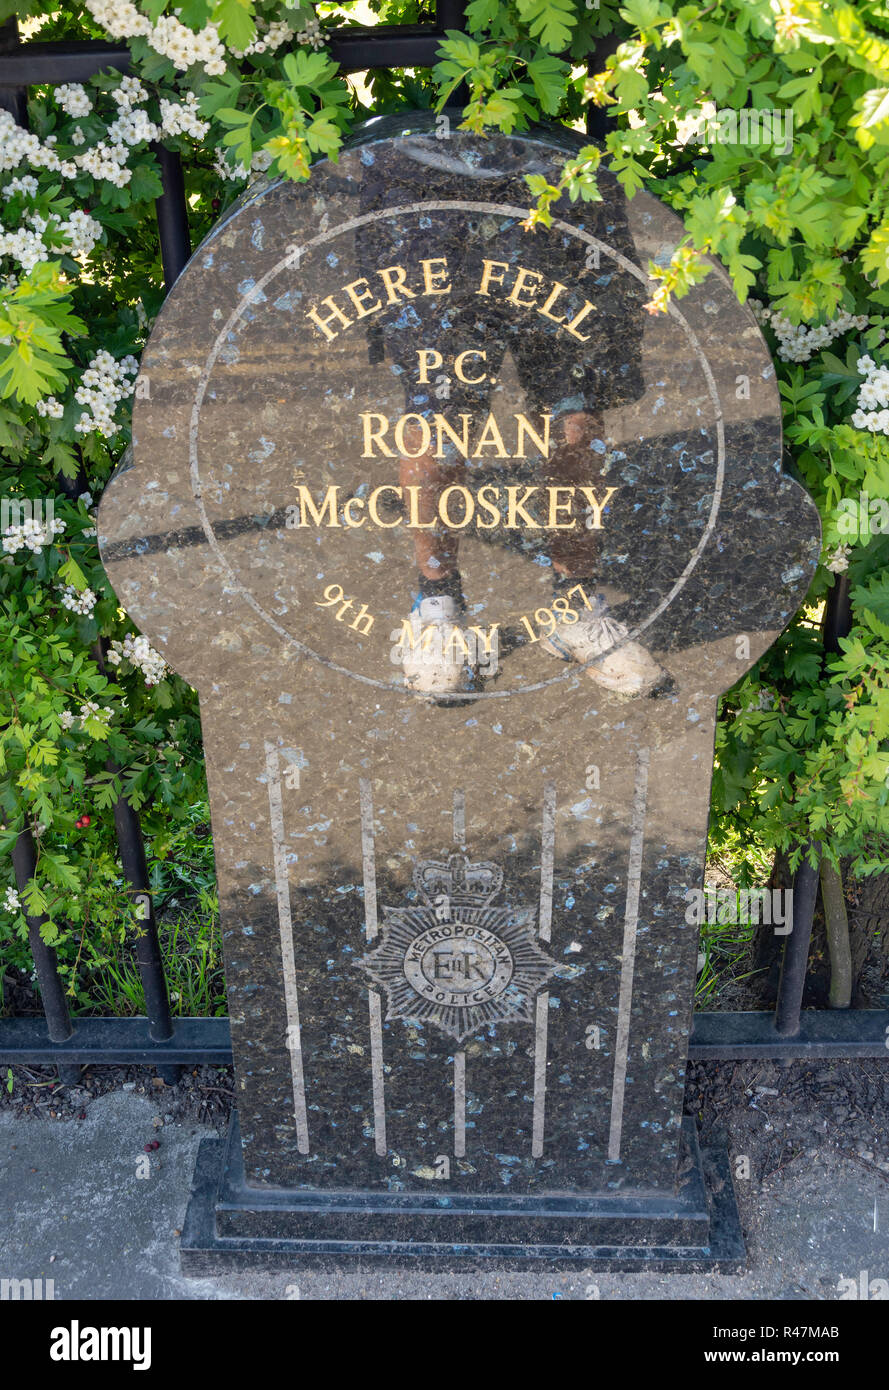 PC Ronan McCloskey memorial, Dudden Hill Lane, Neasden, London Borough of Brent, Greater London, England, United Kingdom Stock Photo